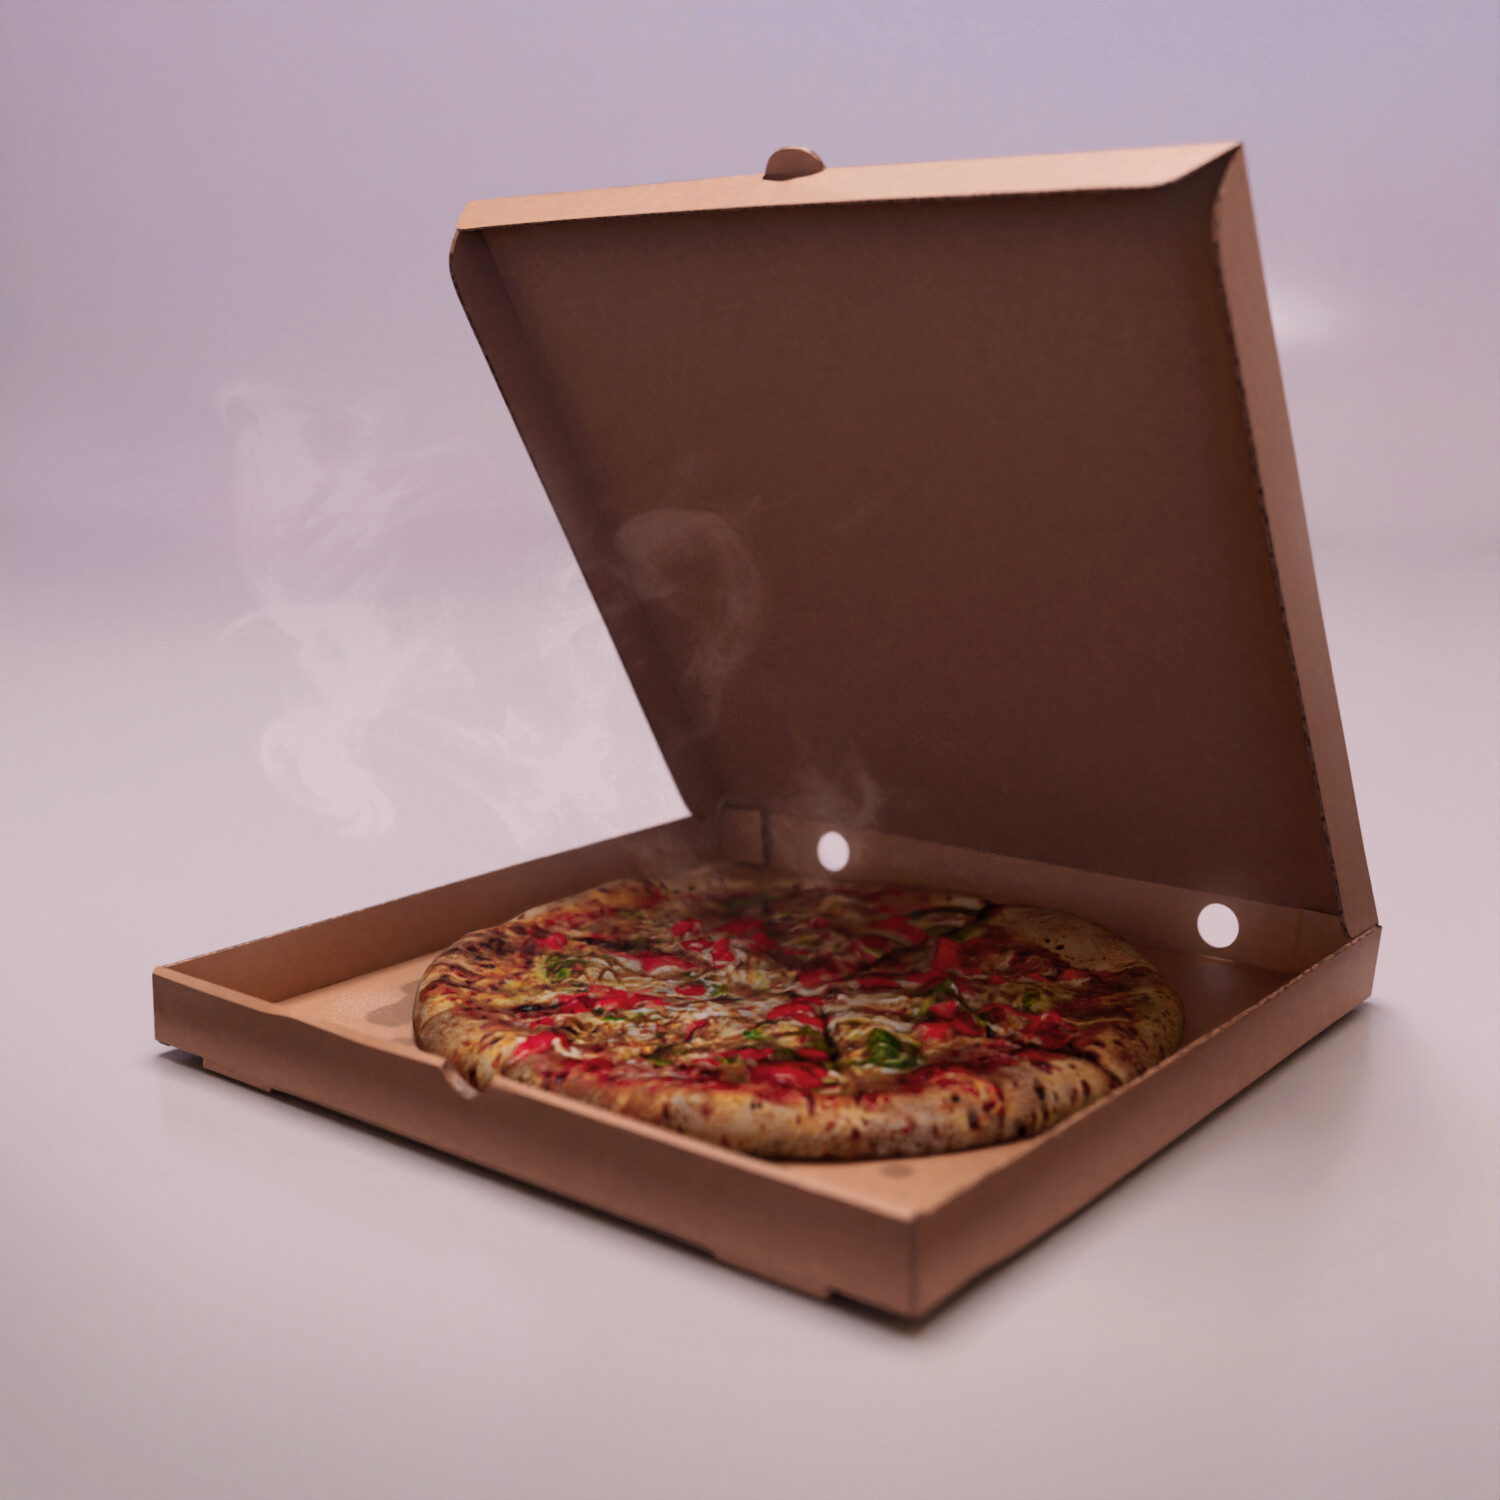 ArtStation - pizza box design